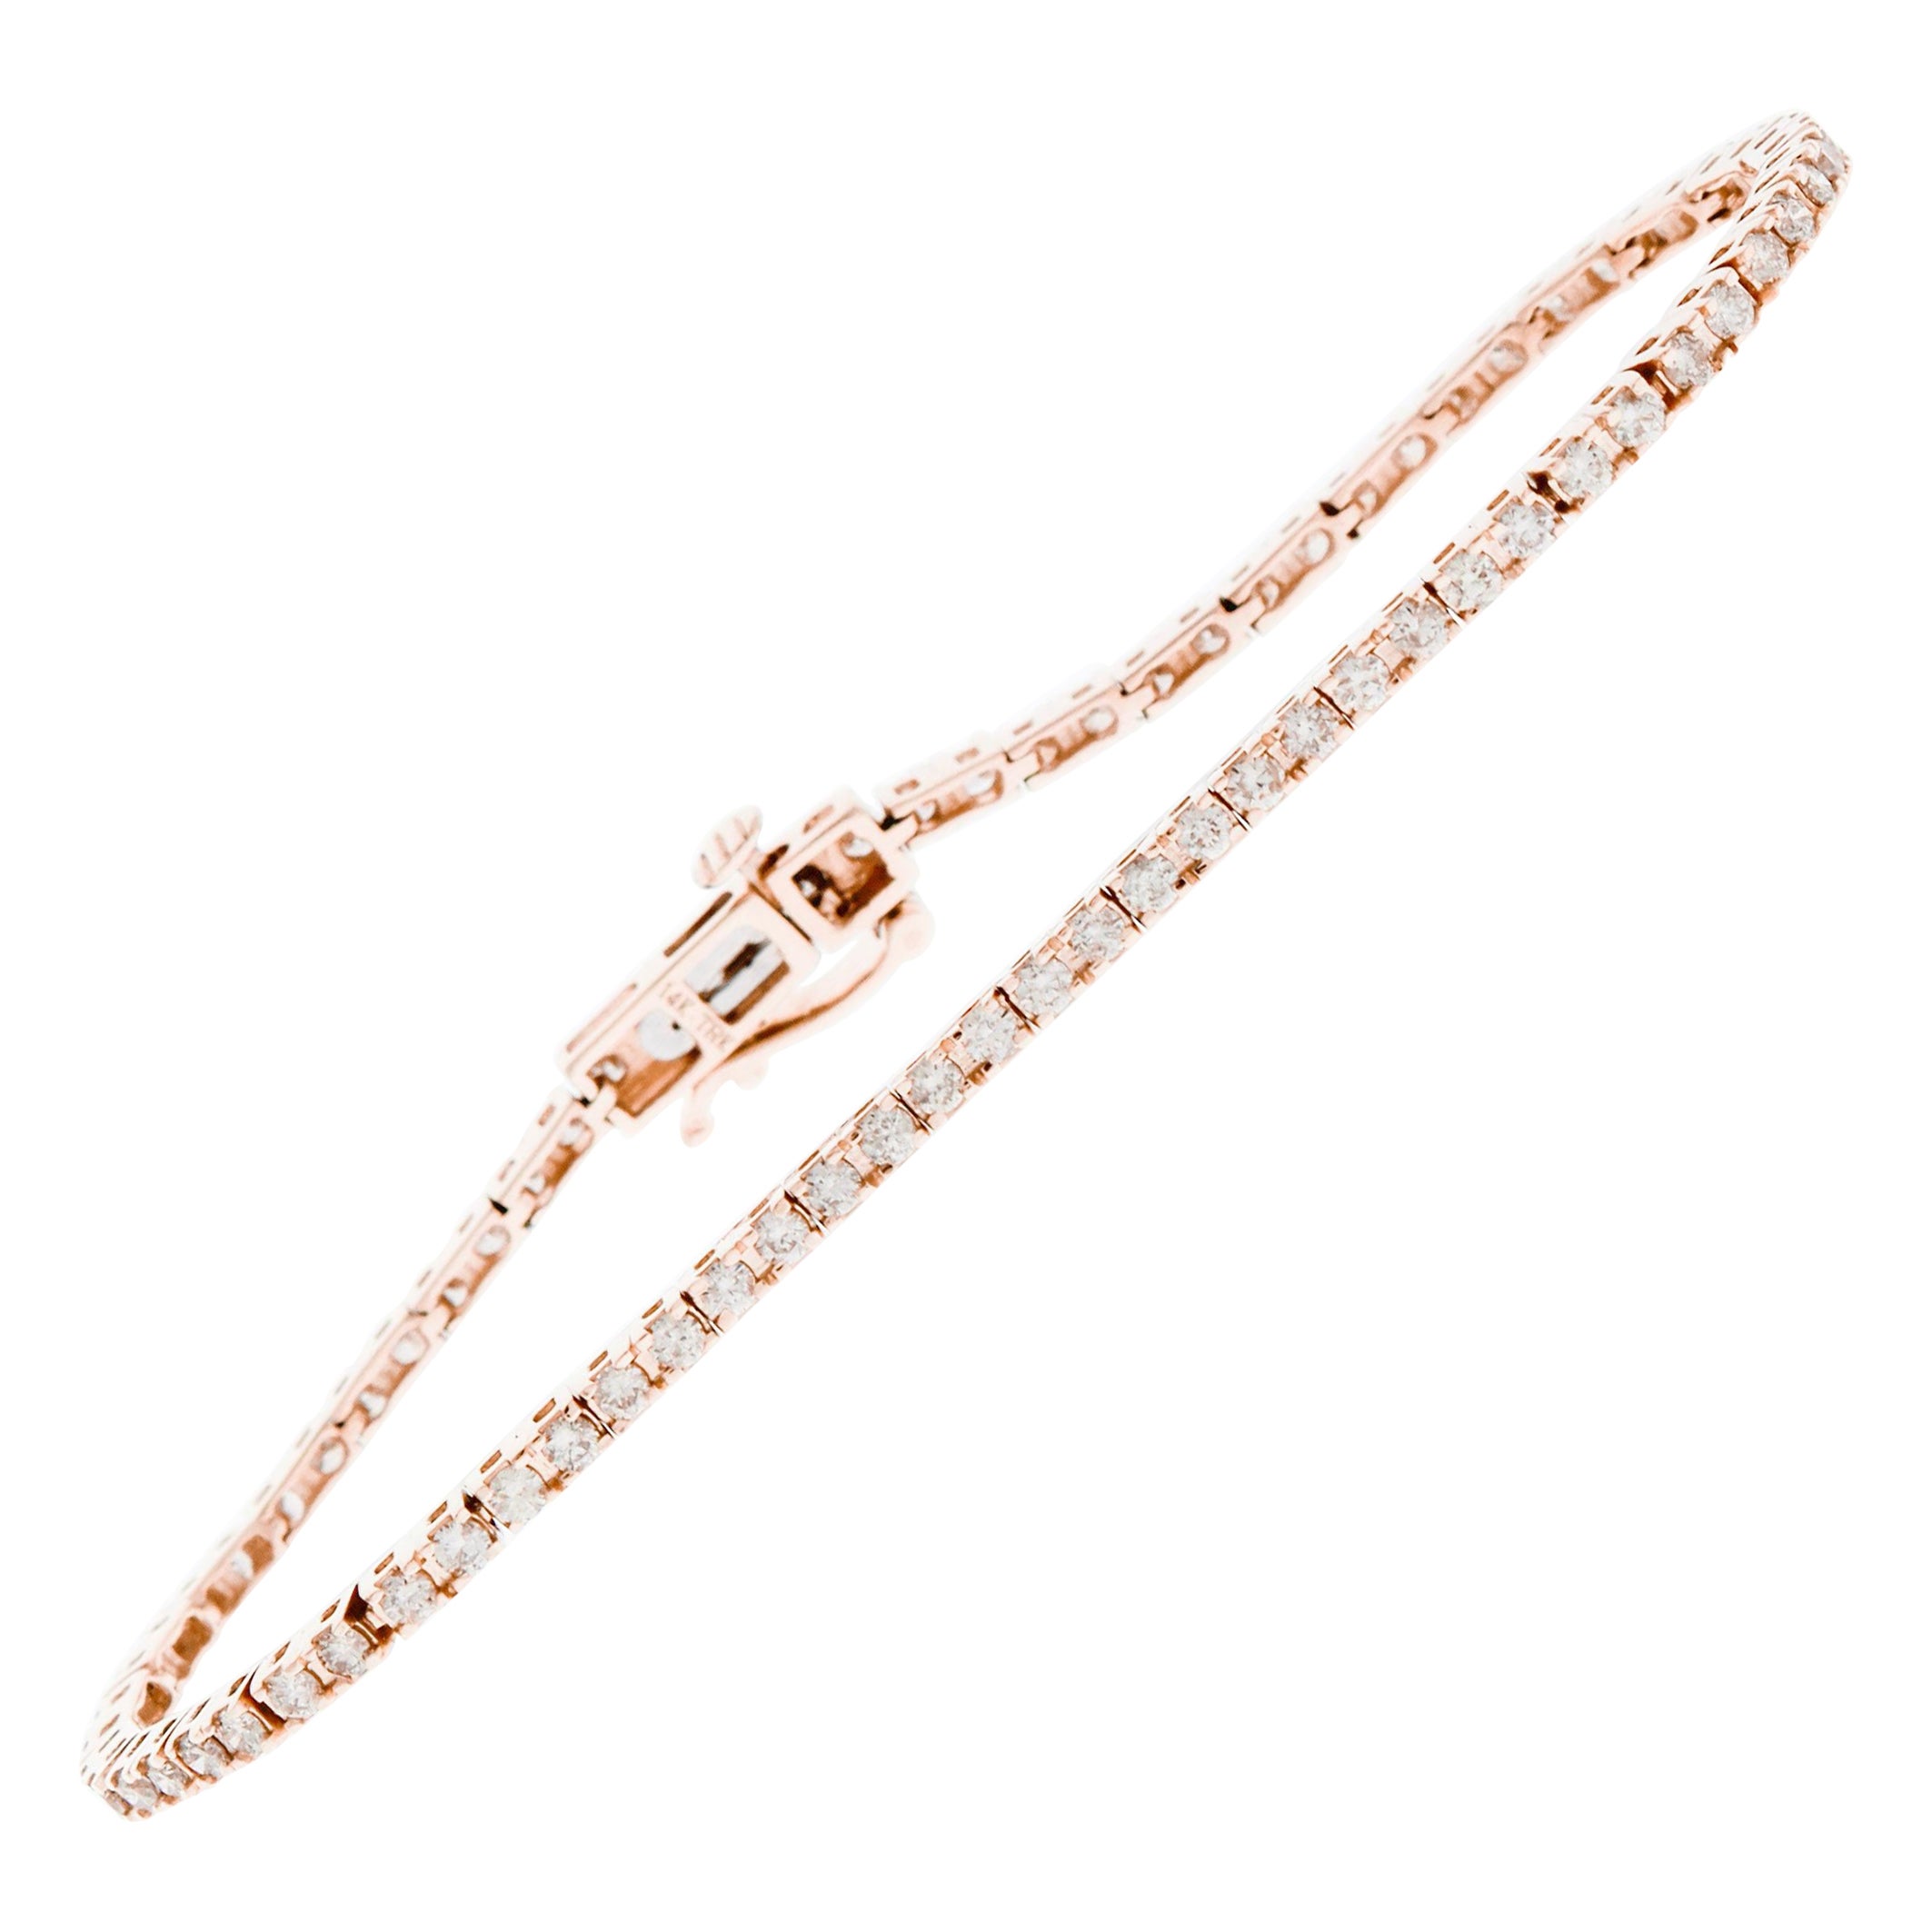 2 Carat Natural Round Diamond 4-Prong Tennis Bracelet in 14 Karat Rose Gold For Sale